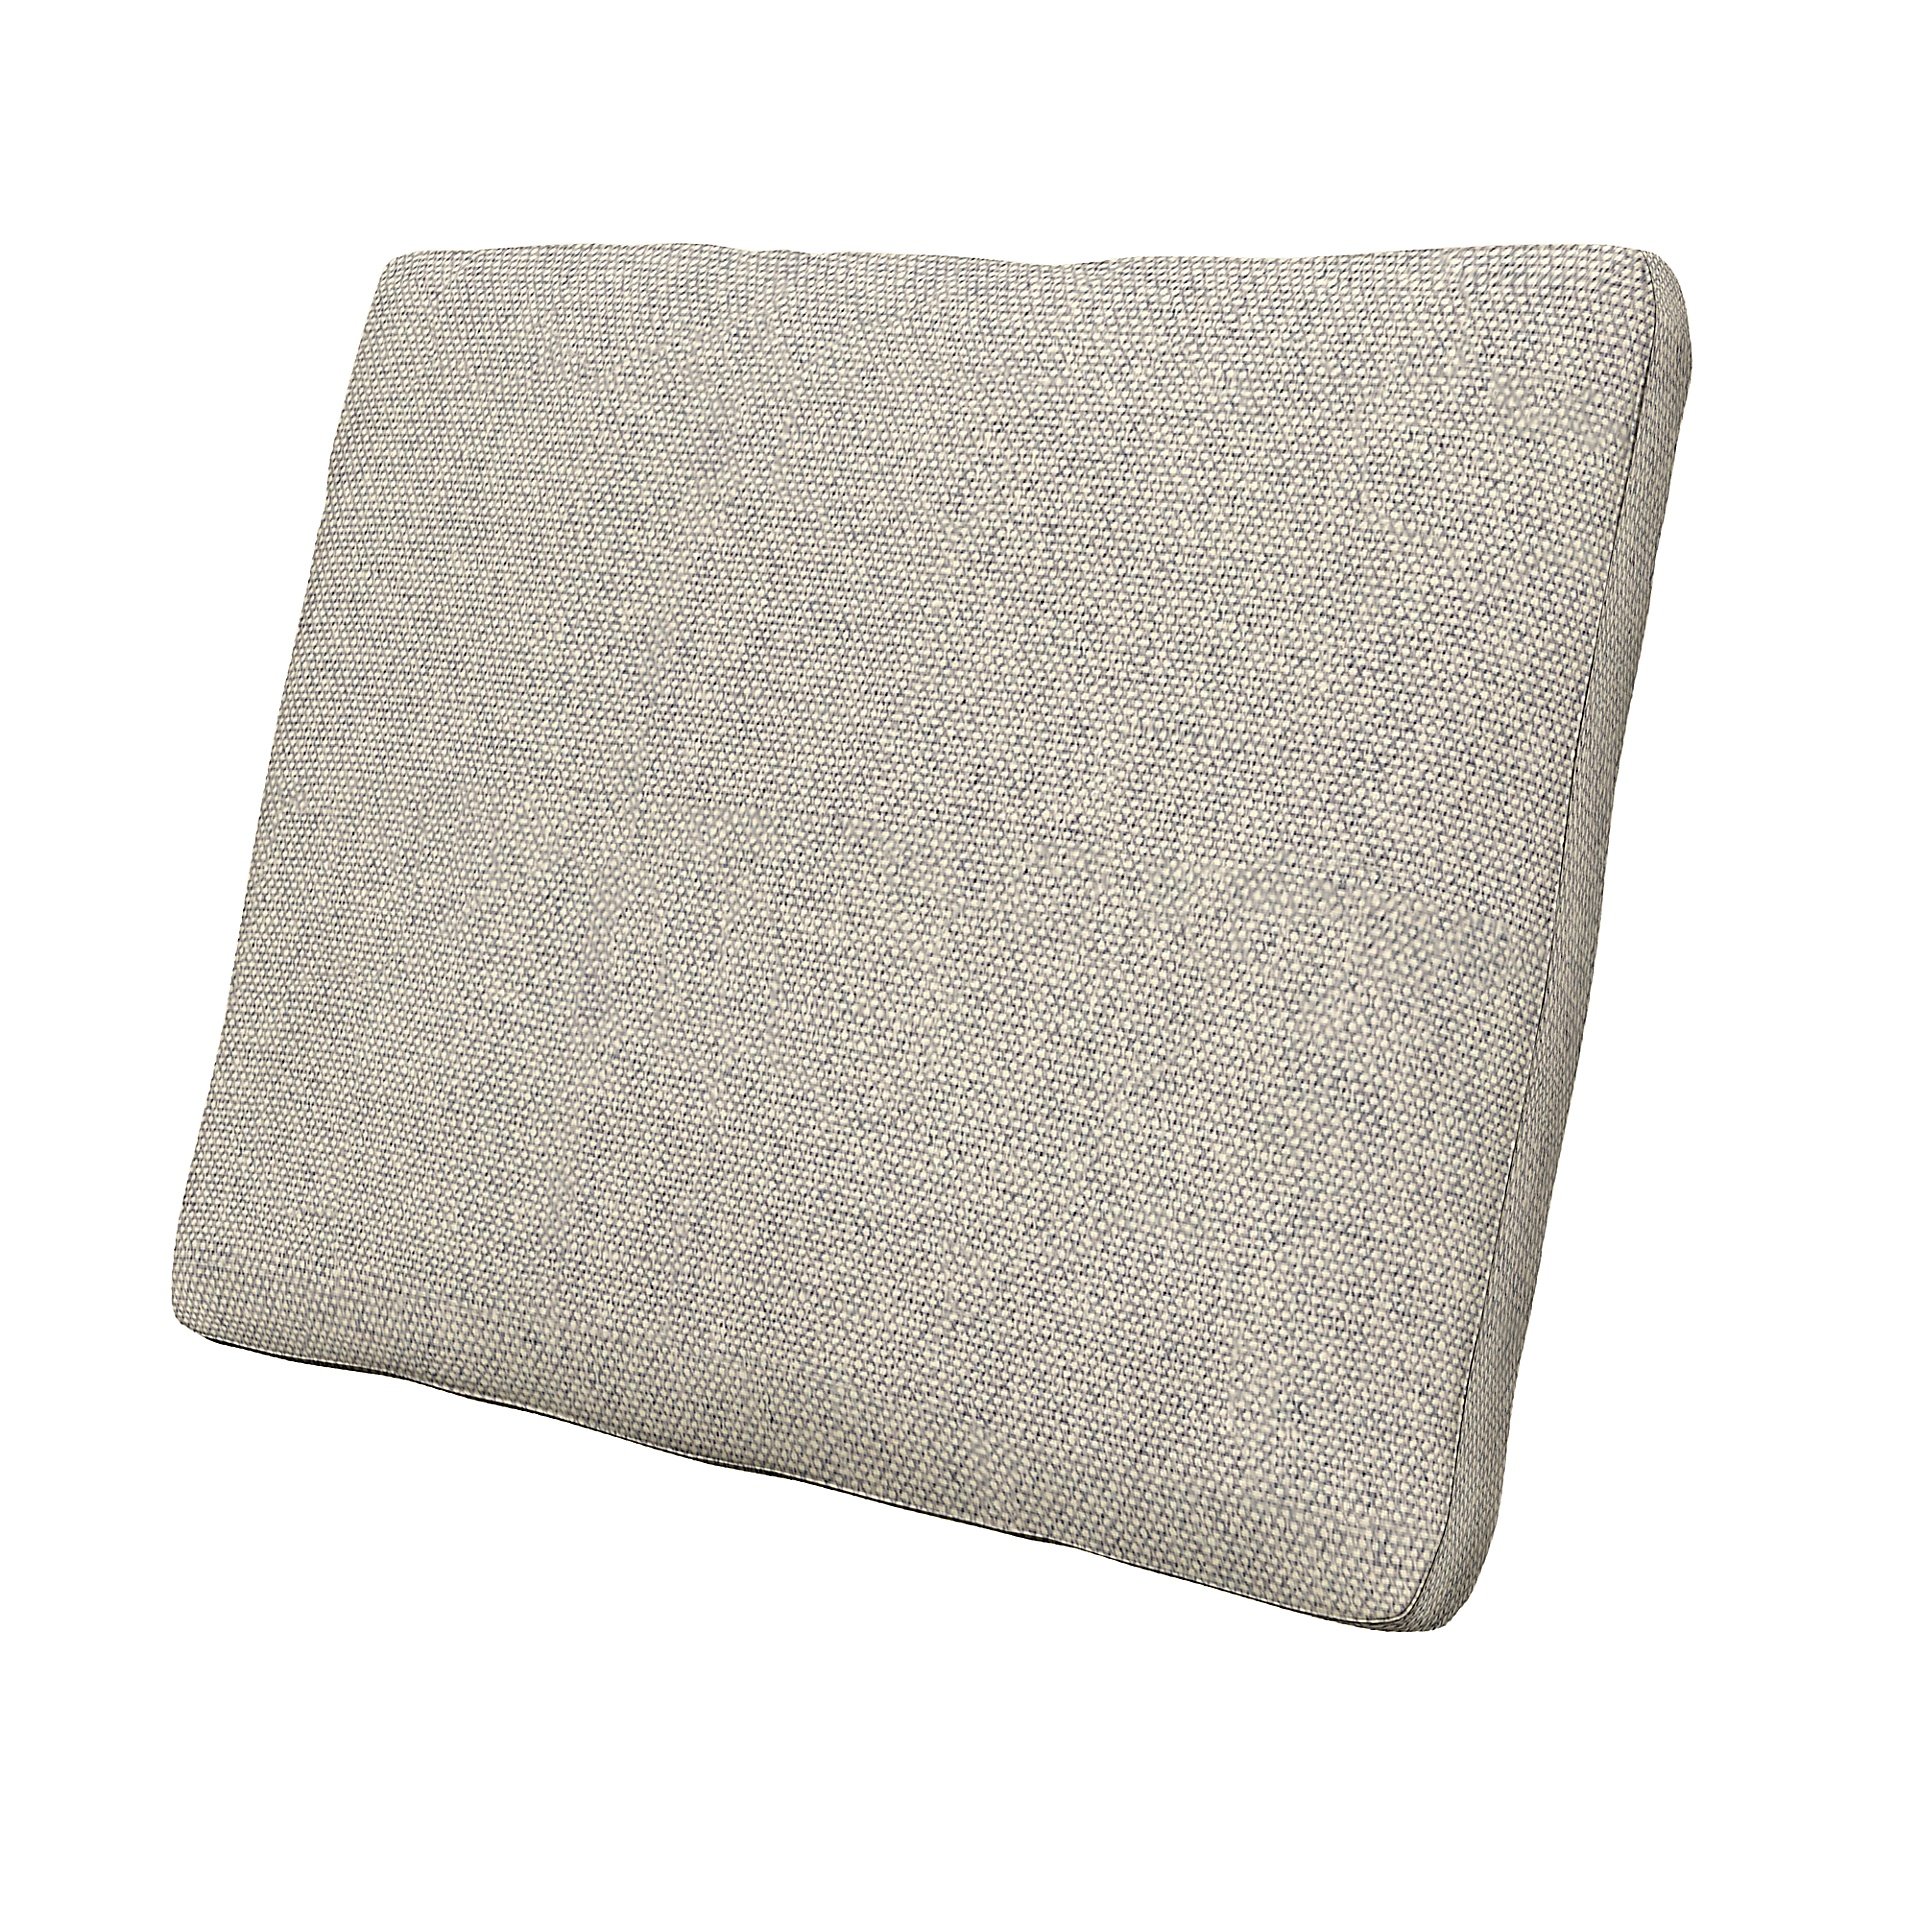 IKEA - Cushion Cover Karlstad 58x48x5 cm, Silver Grey, Conscious - Bemz